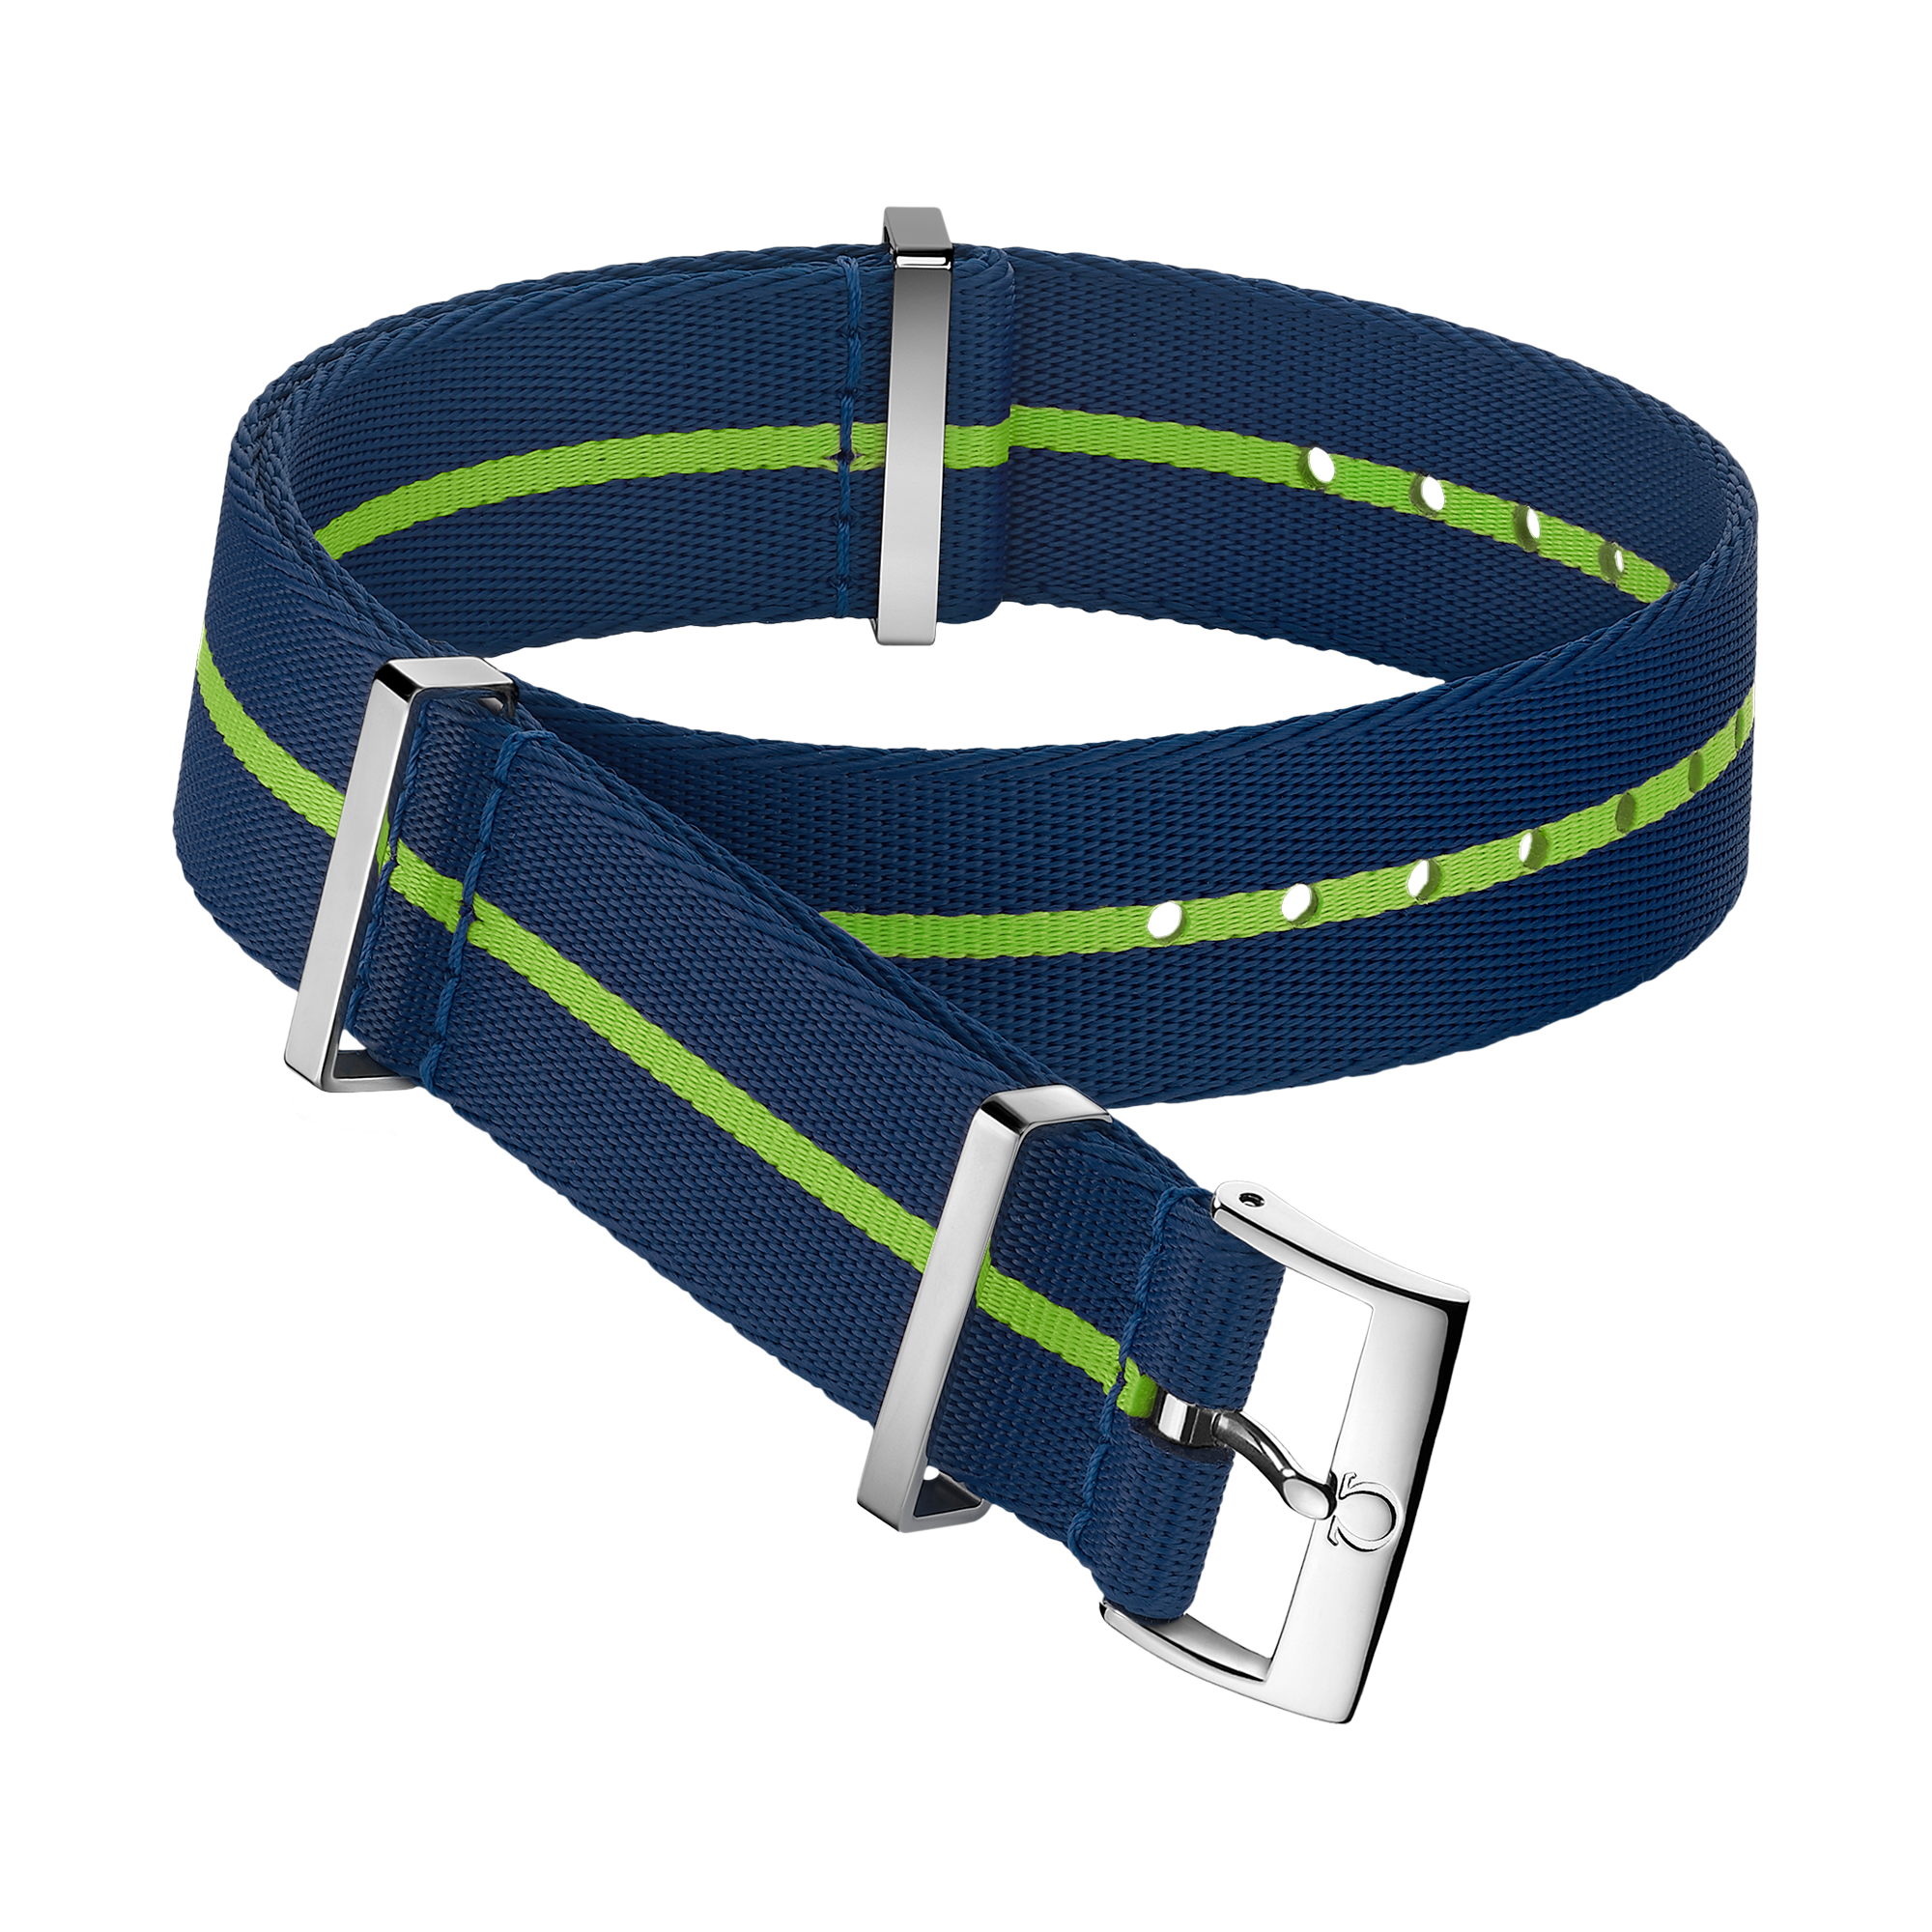 NATO-Armband - Blaues Polyamidarmband mit grünem Streifen - 031CWZ014693